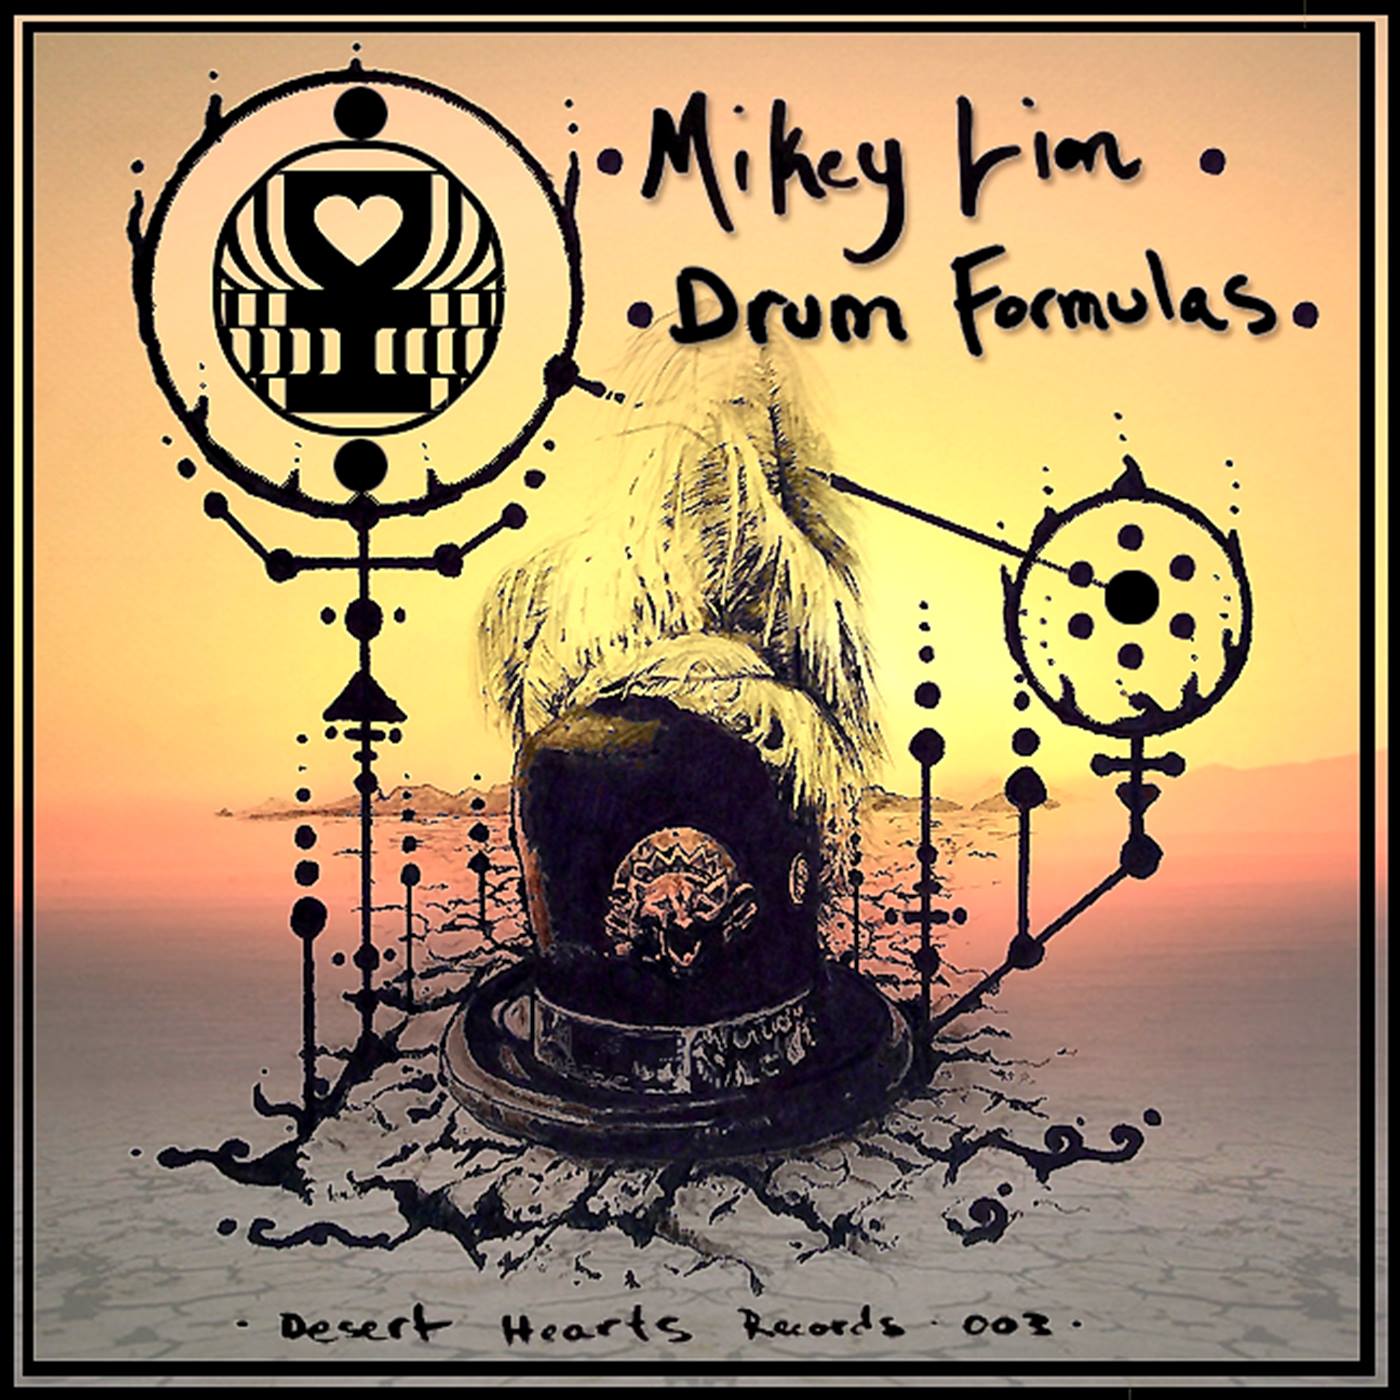 MIKEY LION DRUM FORMULAS EP.jpg